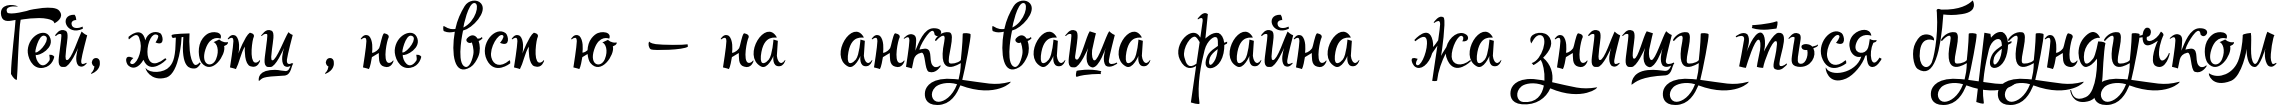 Пример написания шрифтом Rupster Script Free текста на украинском